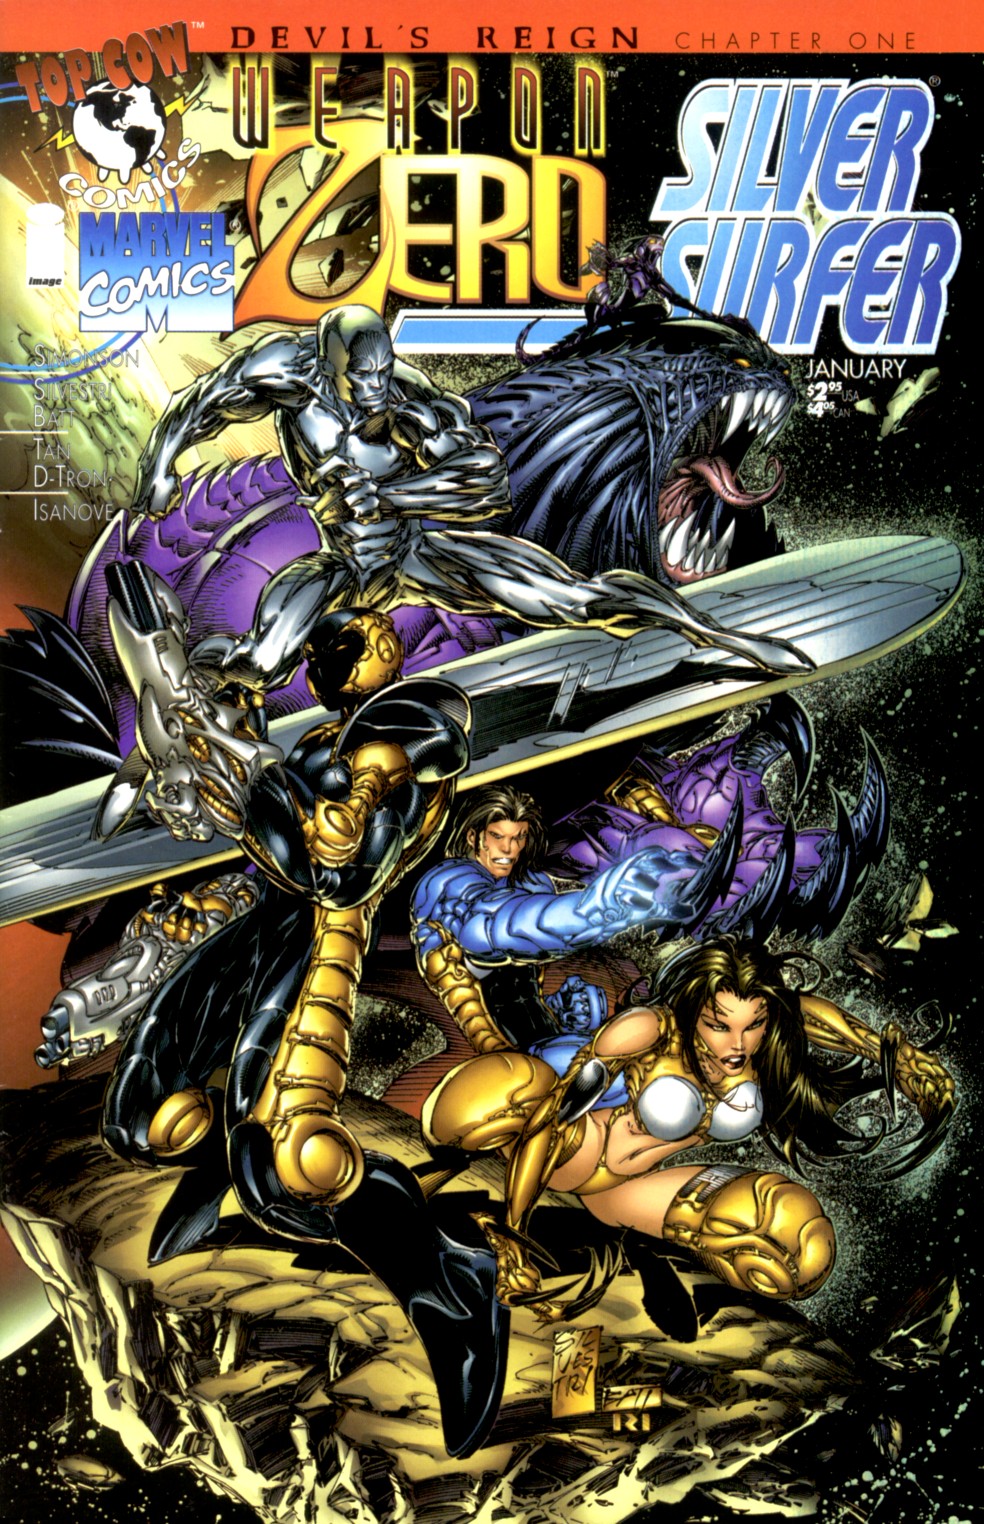 Read online Weapon Zero/Silver Surfer comic -  Issue # Full - 1